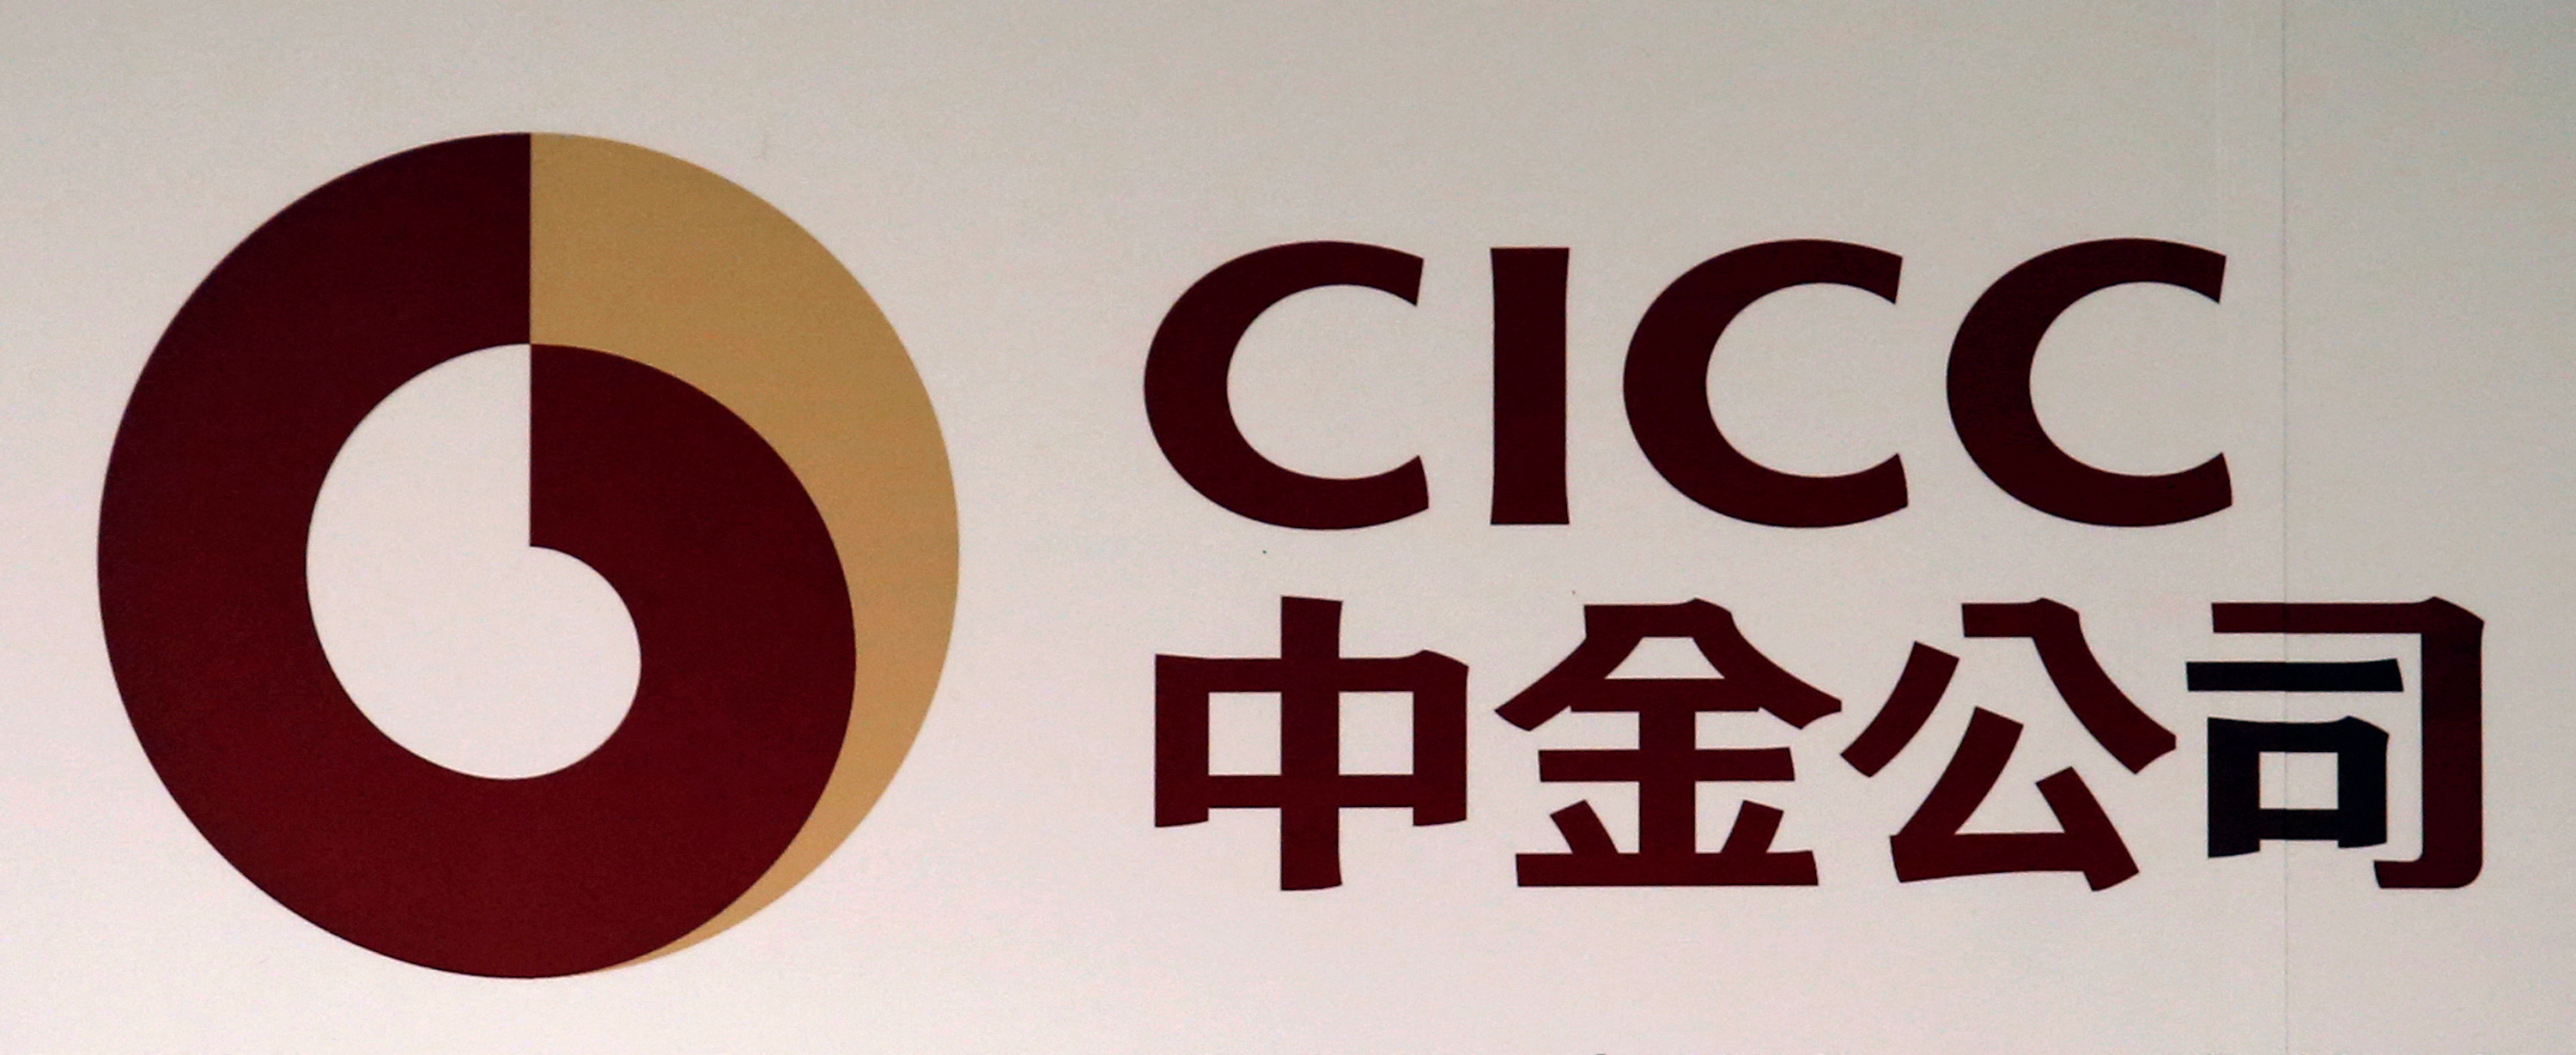 The company logo of China International Capital Corporation Ltd is seen here